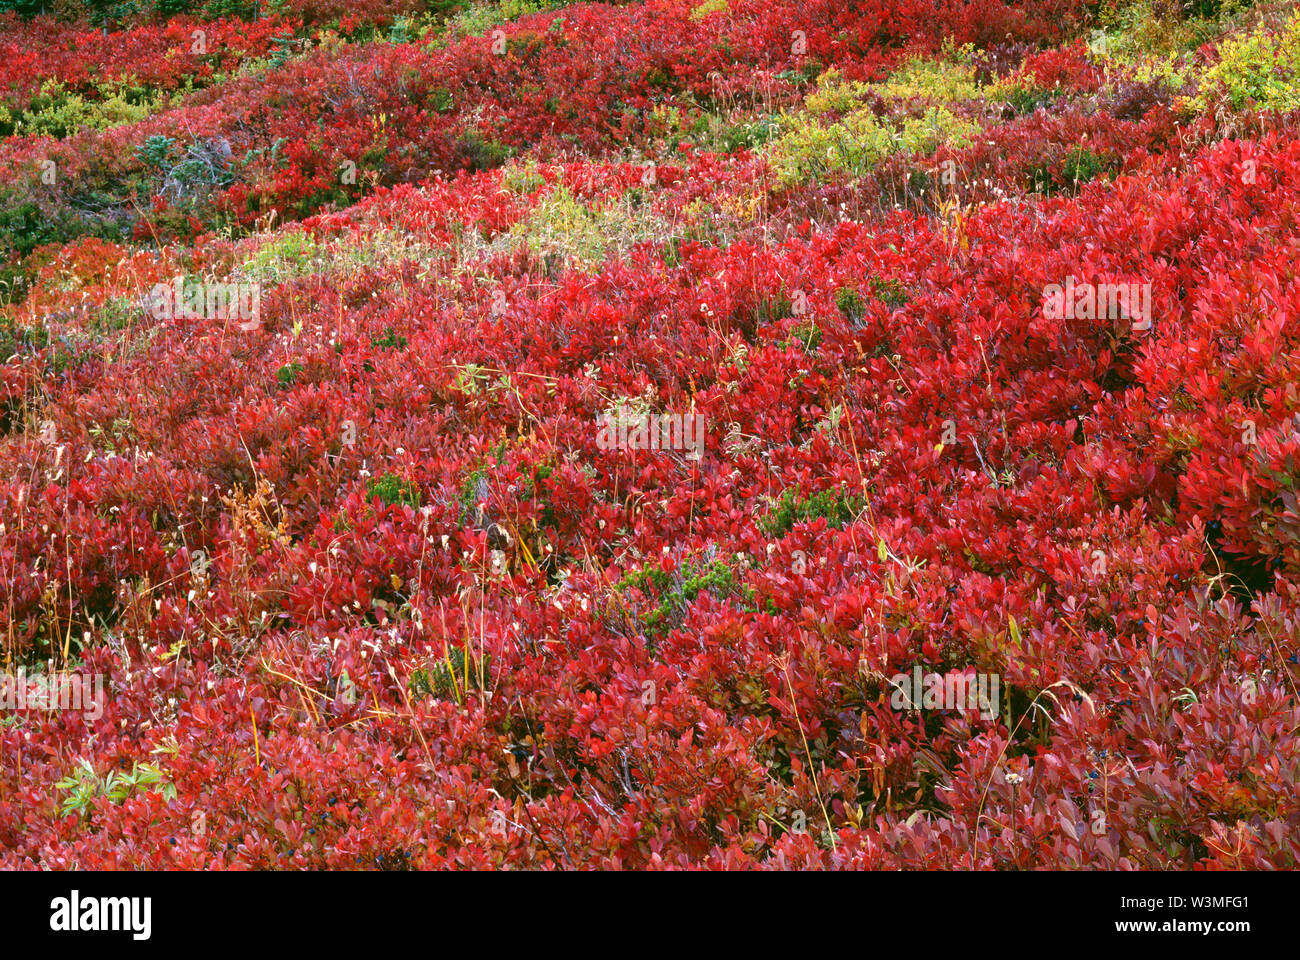 USA, Washington, Mt. Rainier National Park, Fall-colored meadow of huckleberry (Vaccinium spp.), Paradise area. Stock Photo